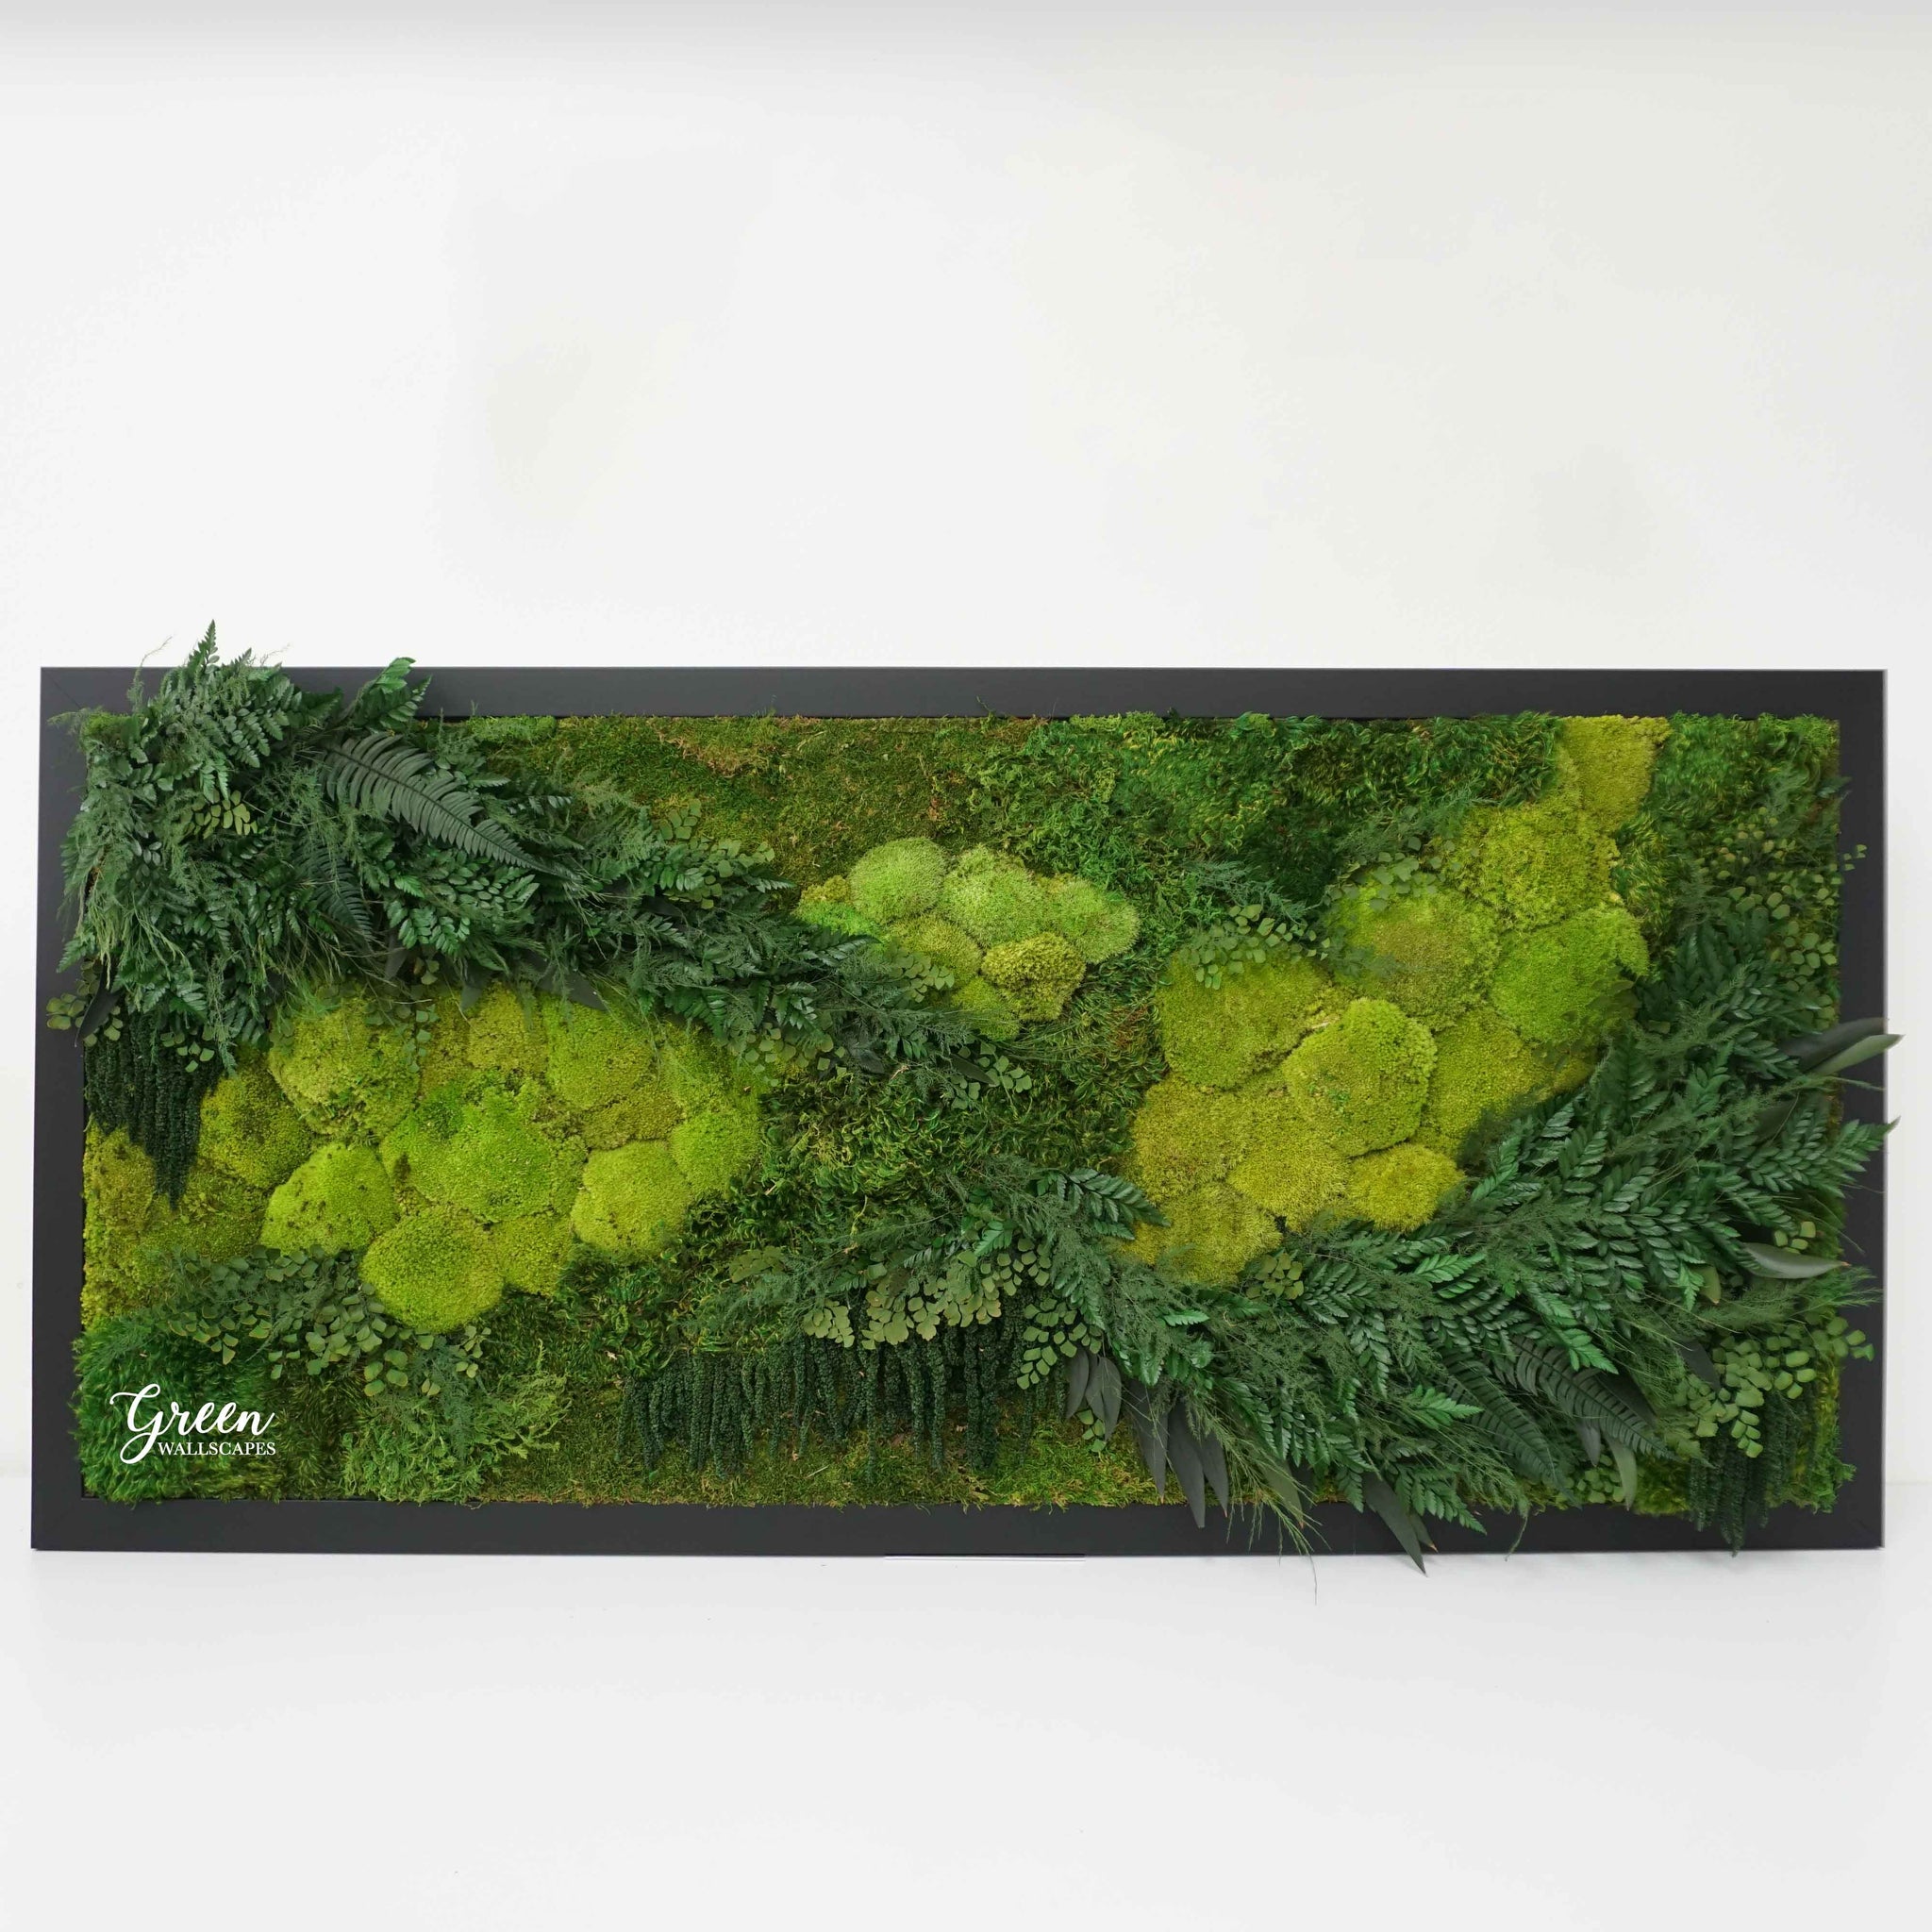 Moss Wall | Green wall art | Preserved moss | Plant wall decor | Plant wall  art 45x45 grey frame